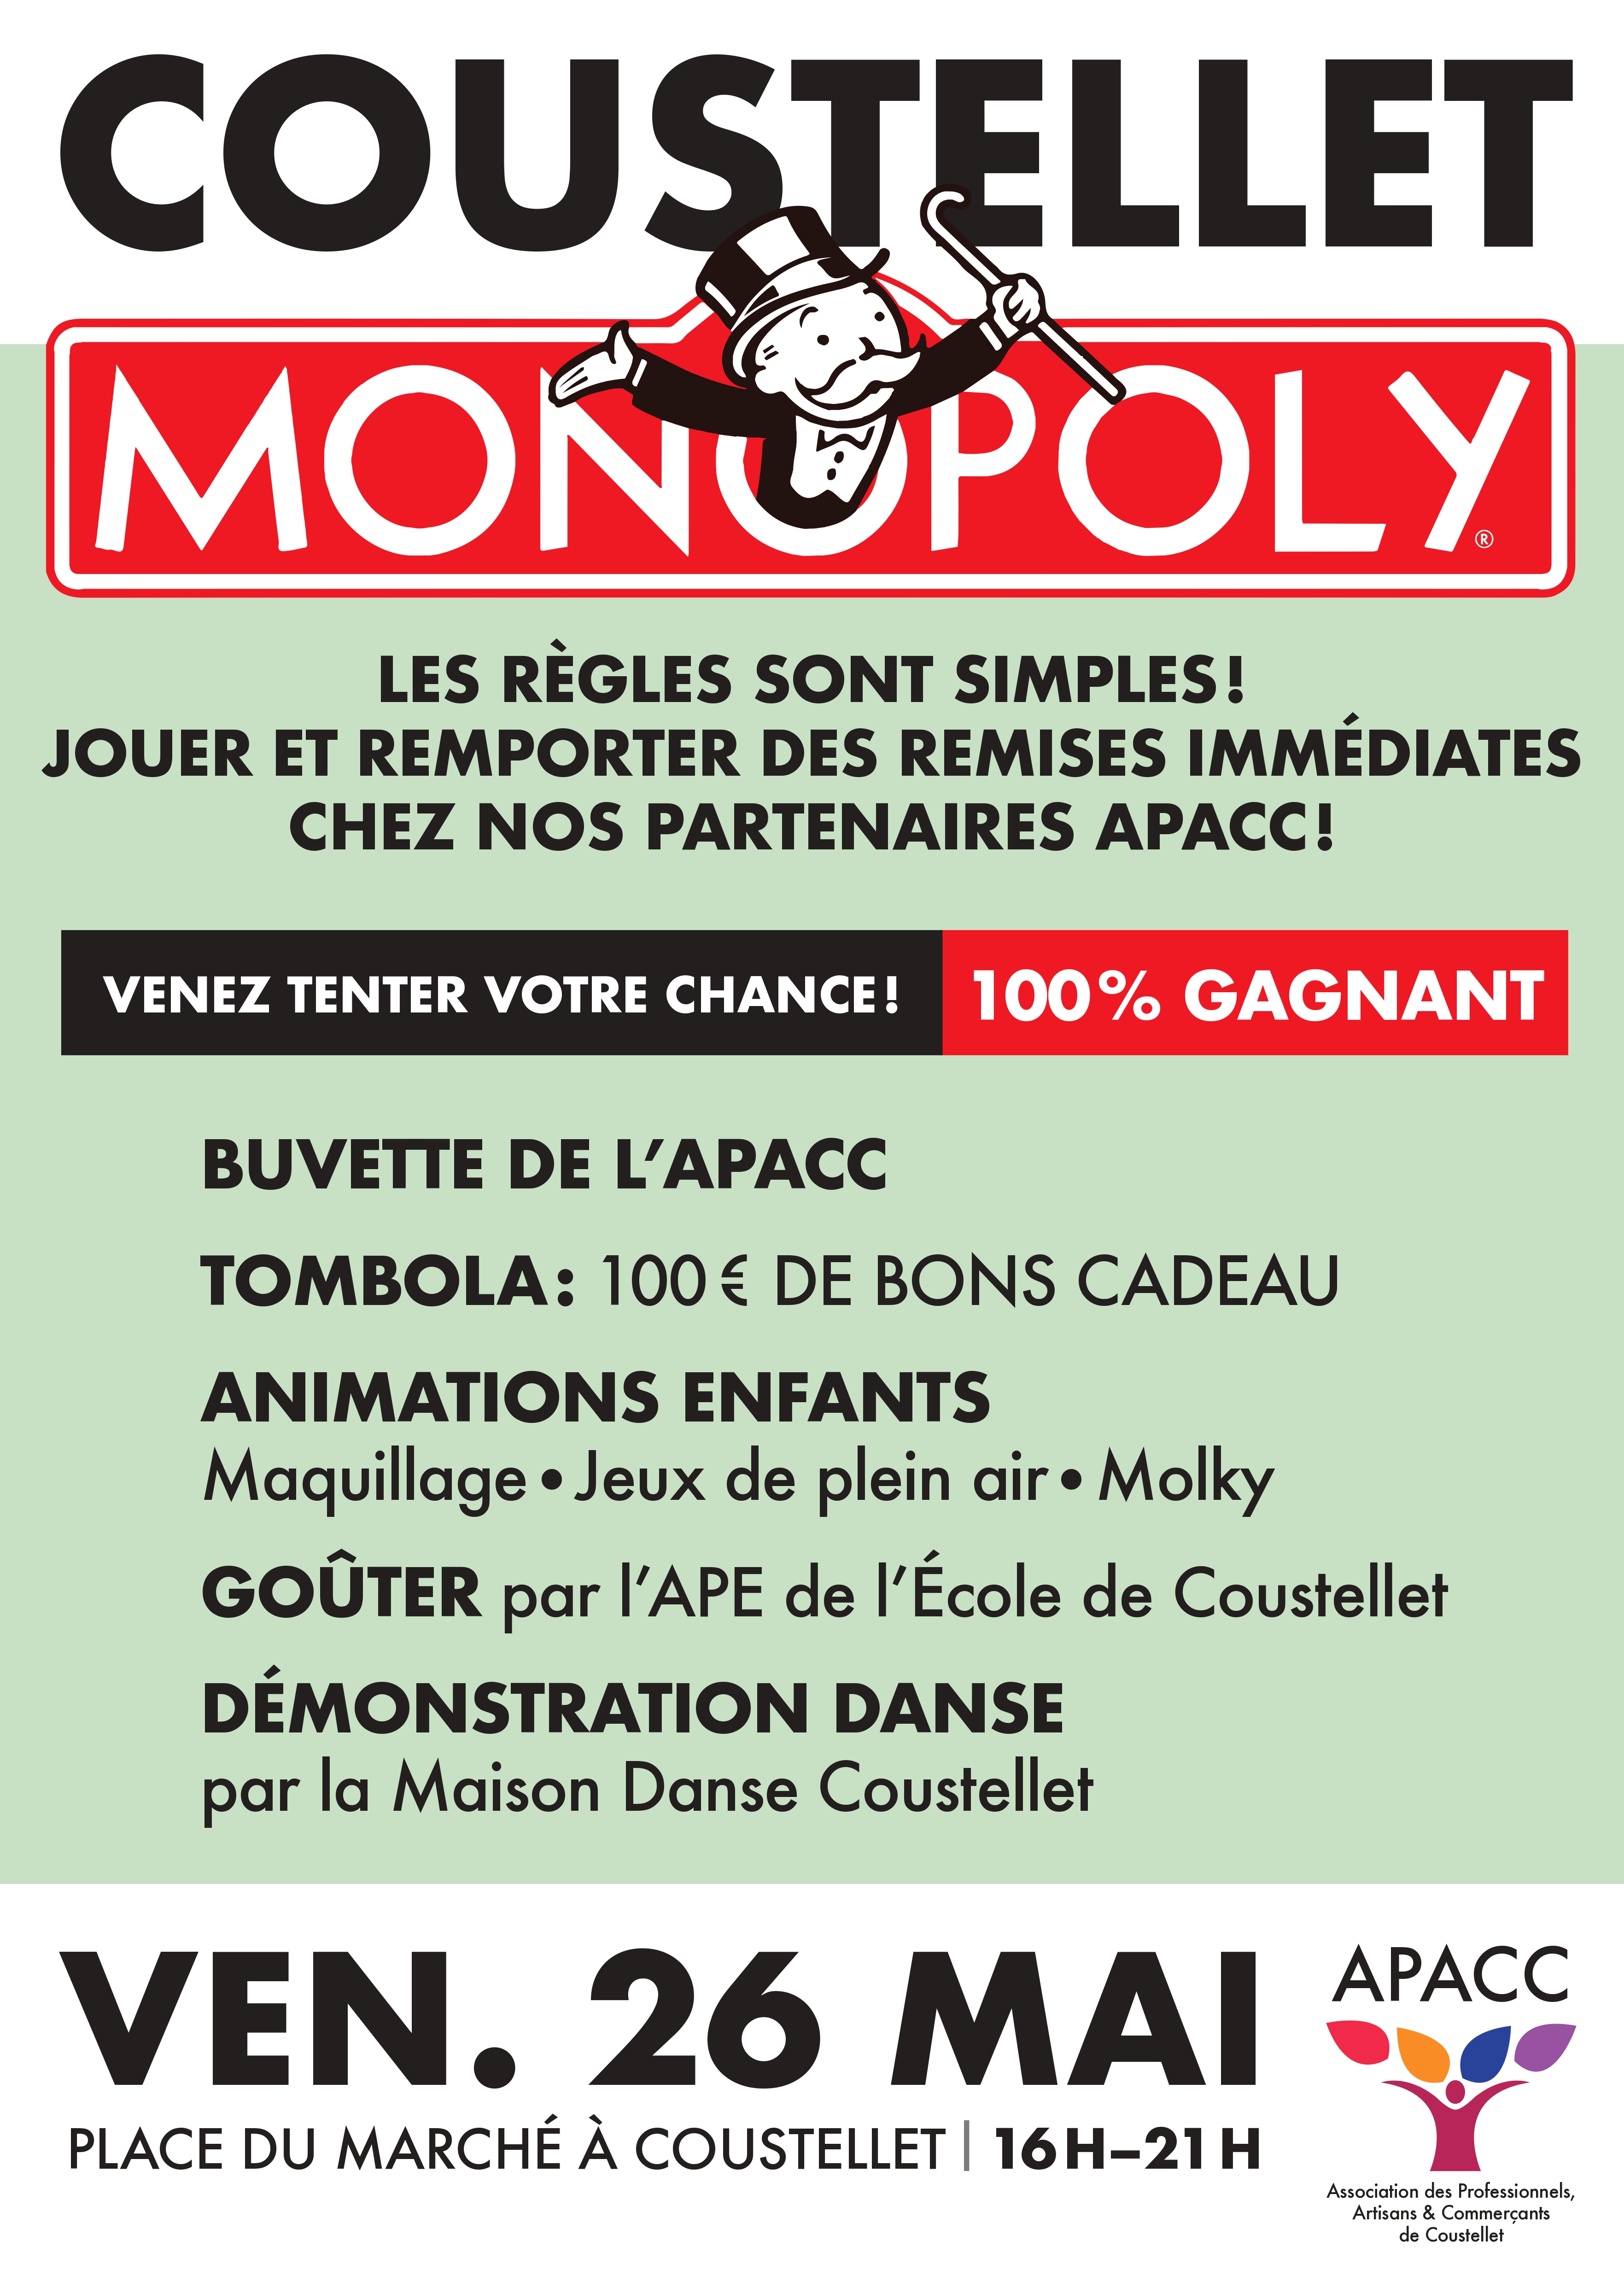 Monopoly Coustellet